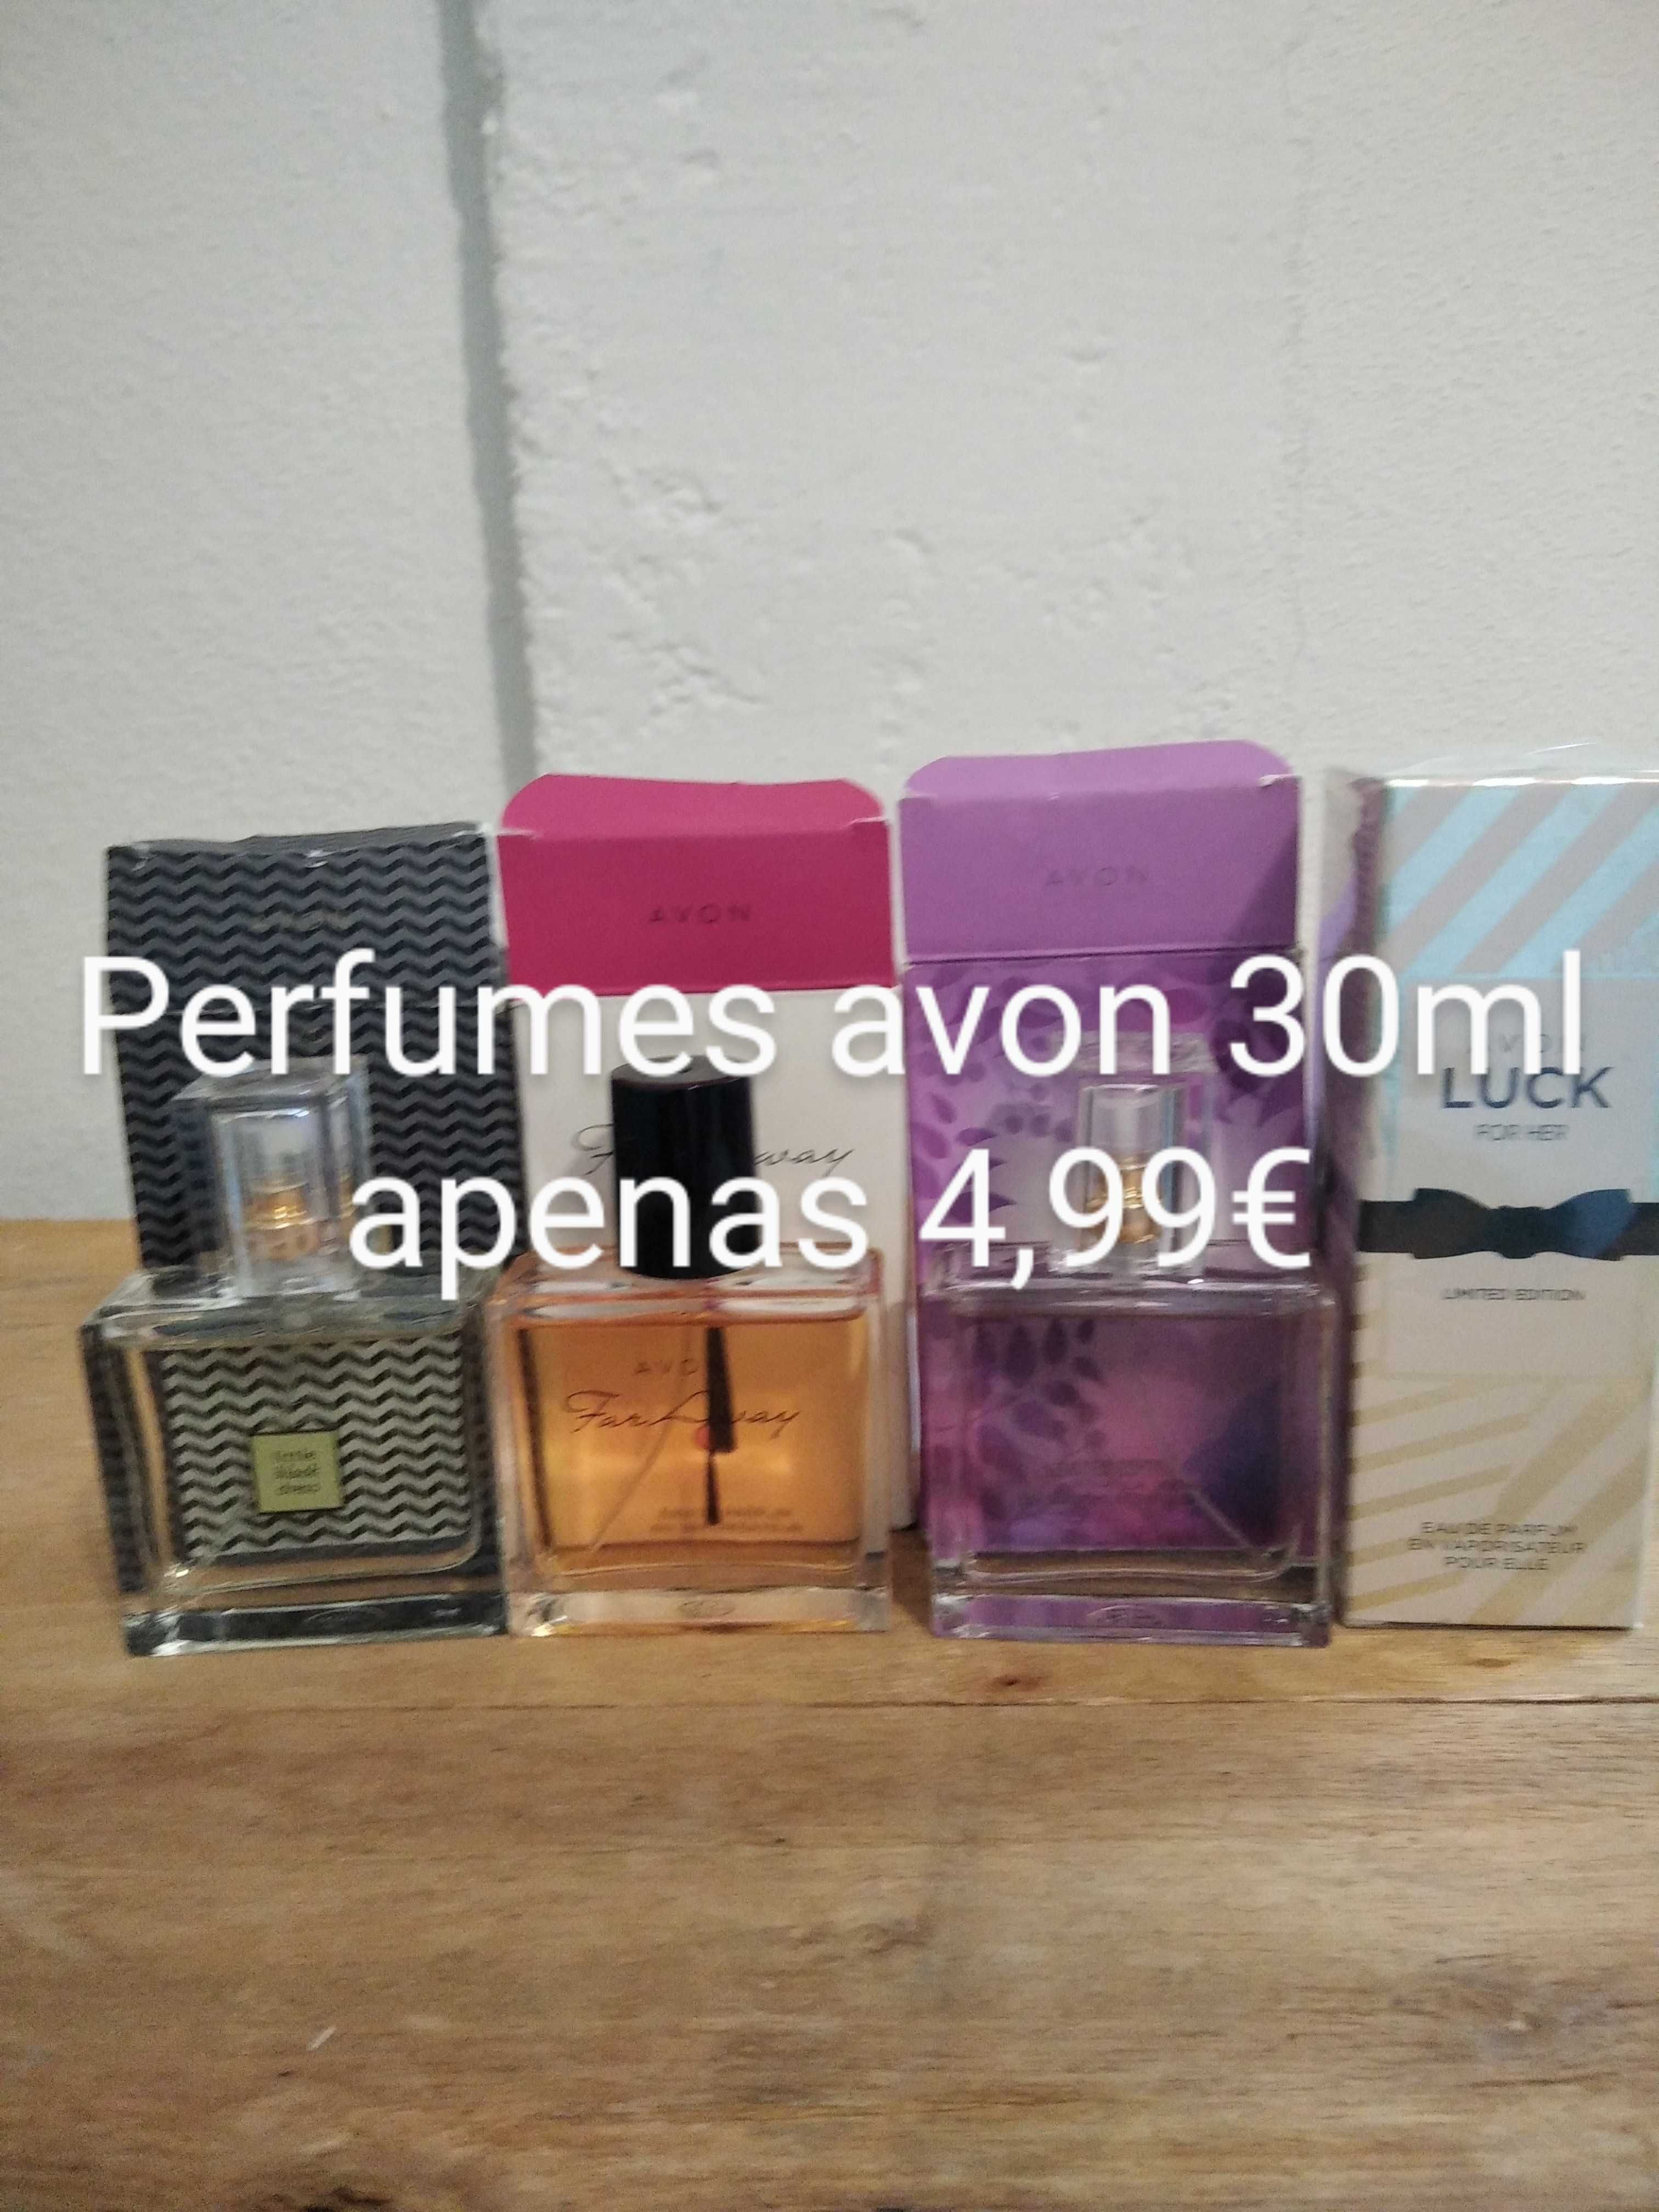 Perfumes avon baixo preço